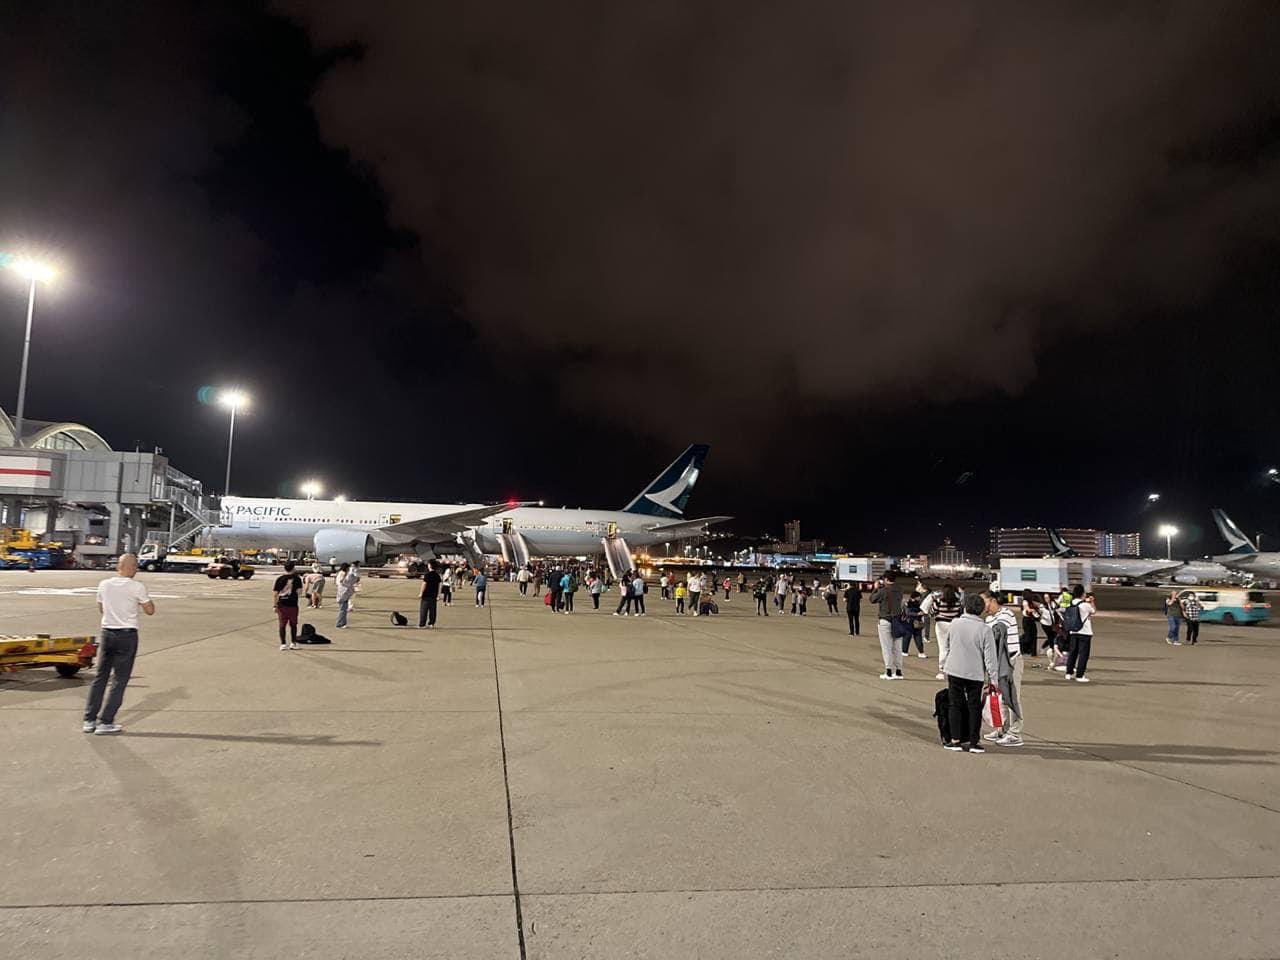 Emergency Evacuation Of  Cathay Pacific Boeing 777-300ER  aircraft Injured 18 People At Hong Kong International Airport.